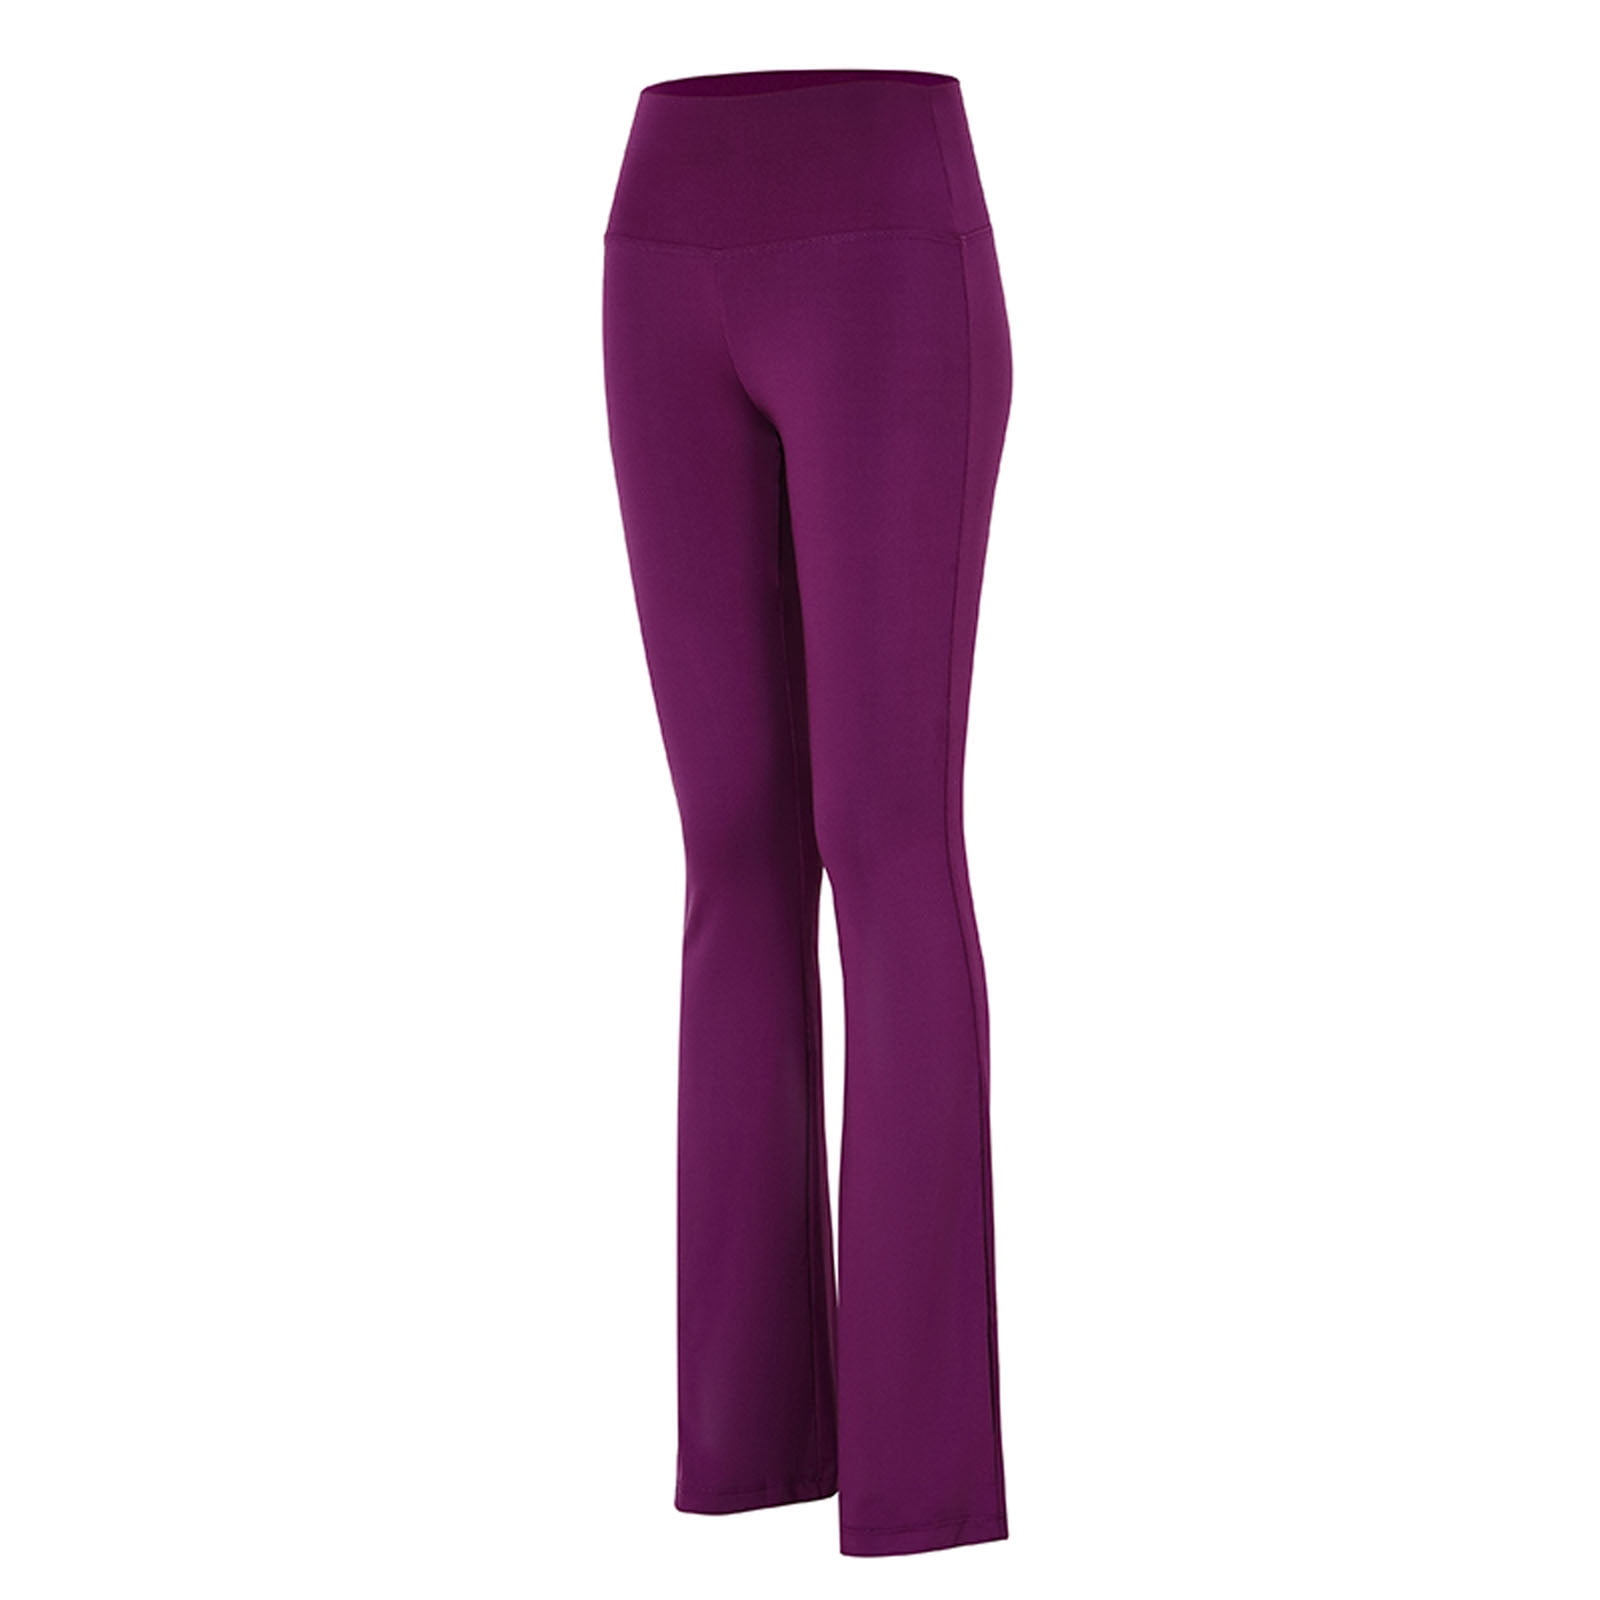 High Waist Purple Women Round Pocket Yoga Pants, Skin Fit at Rs 200 in Delhi